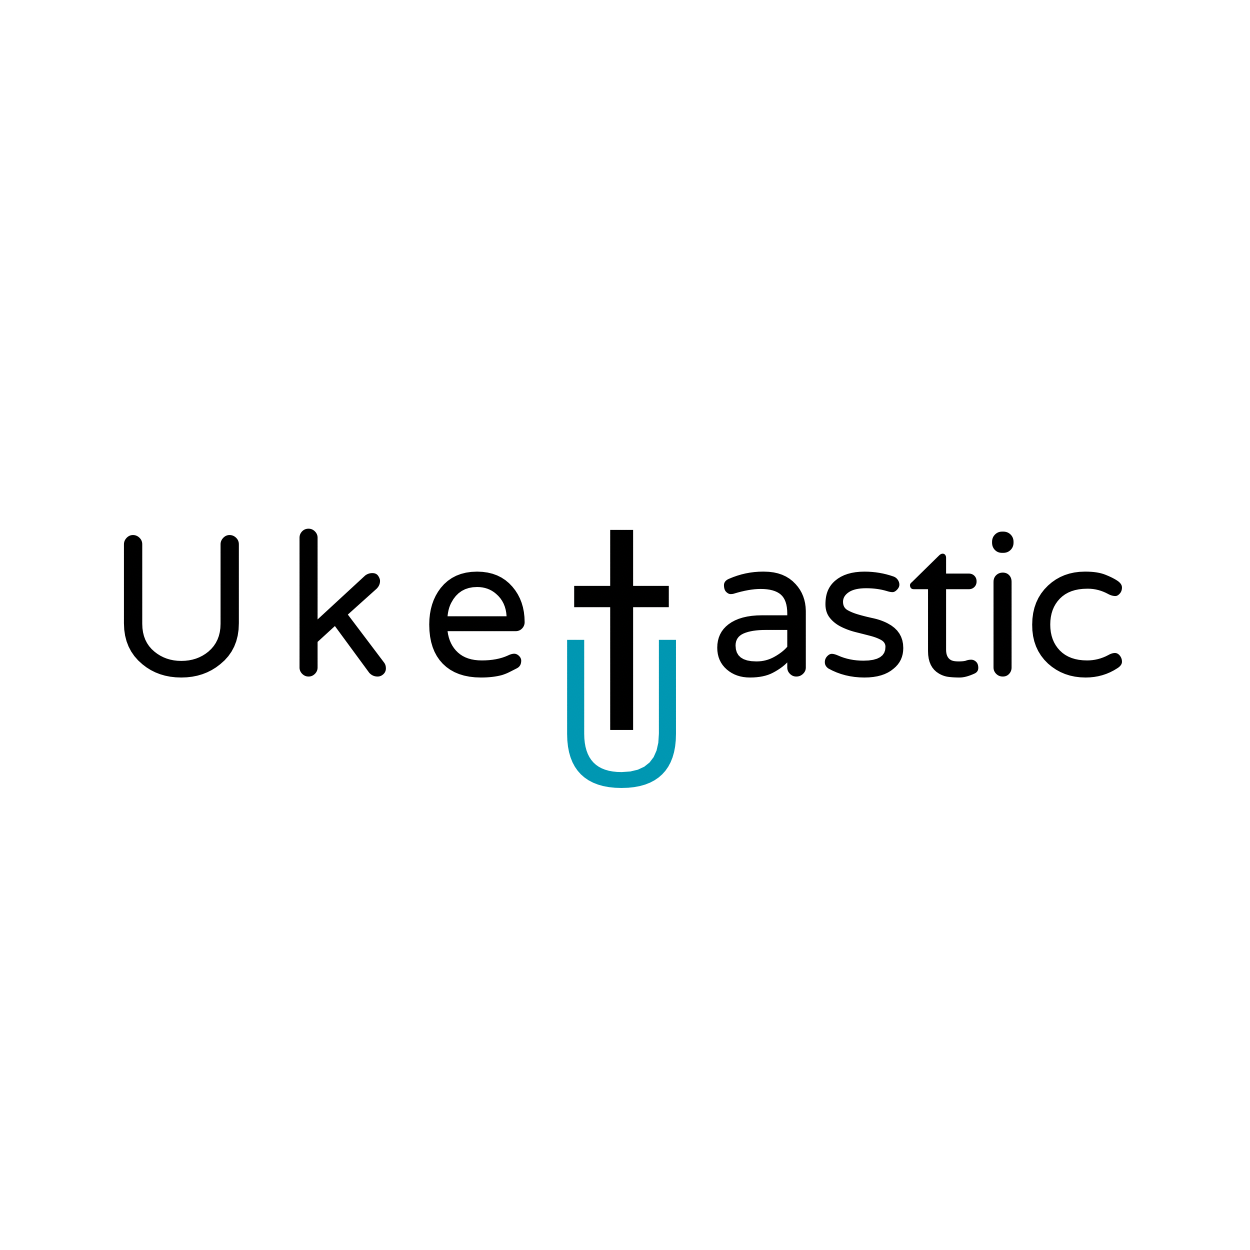 Uke Inspired Brand Clothing - Be Uketastic – Uke Tastic